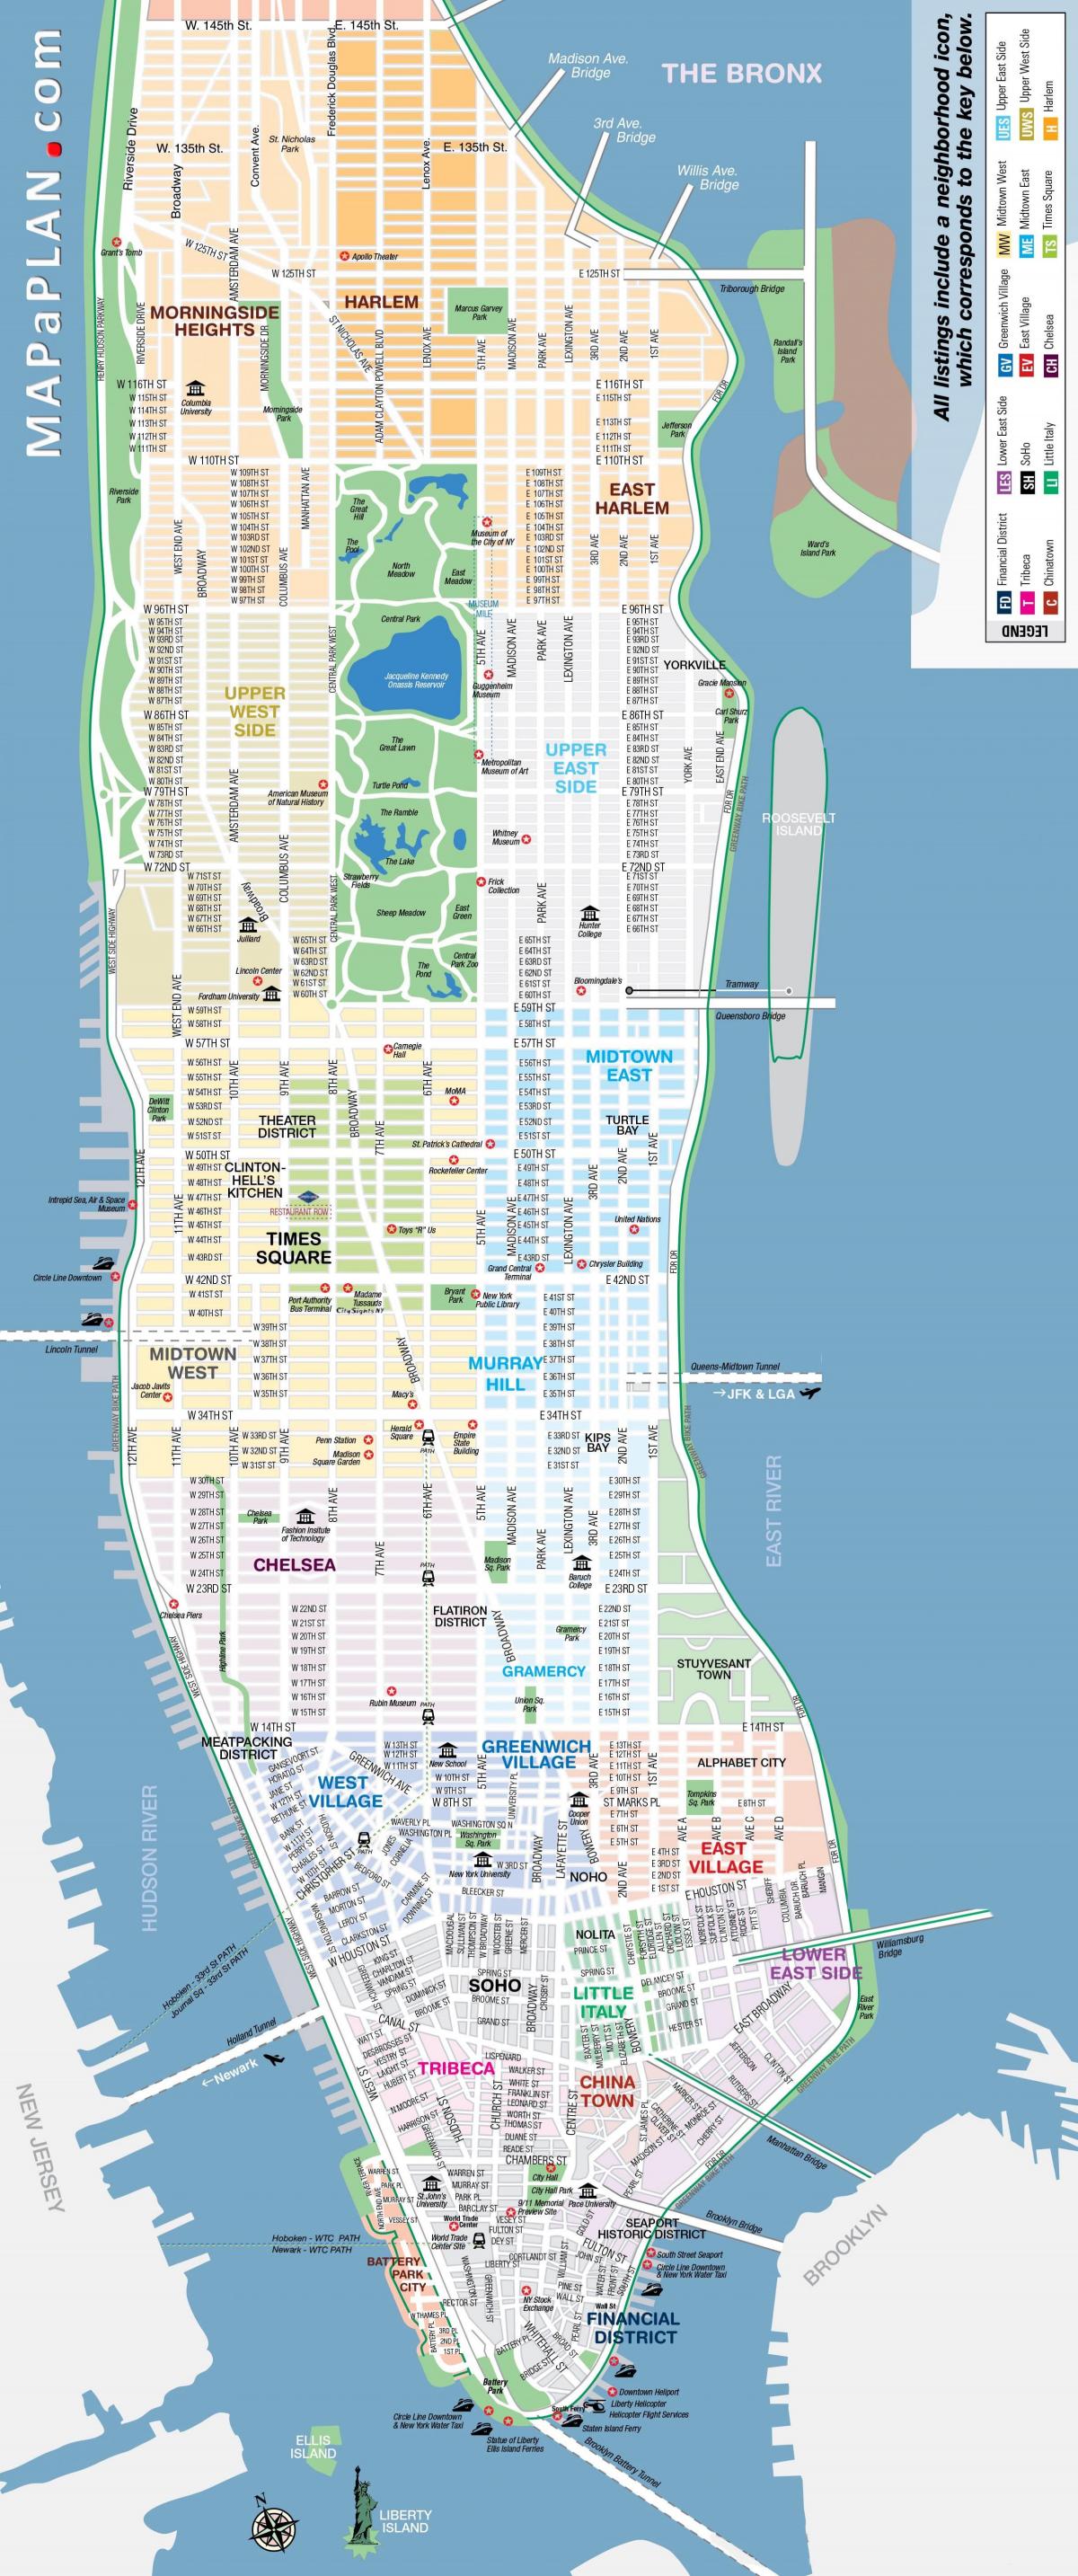 Plan des attractions de Manhattan